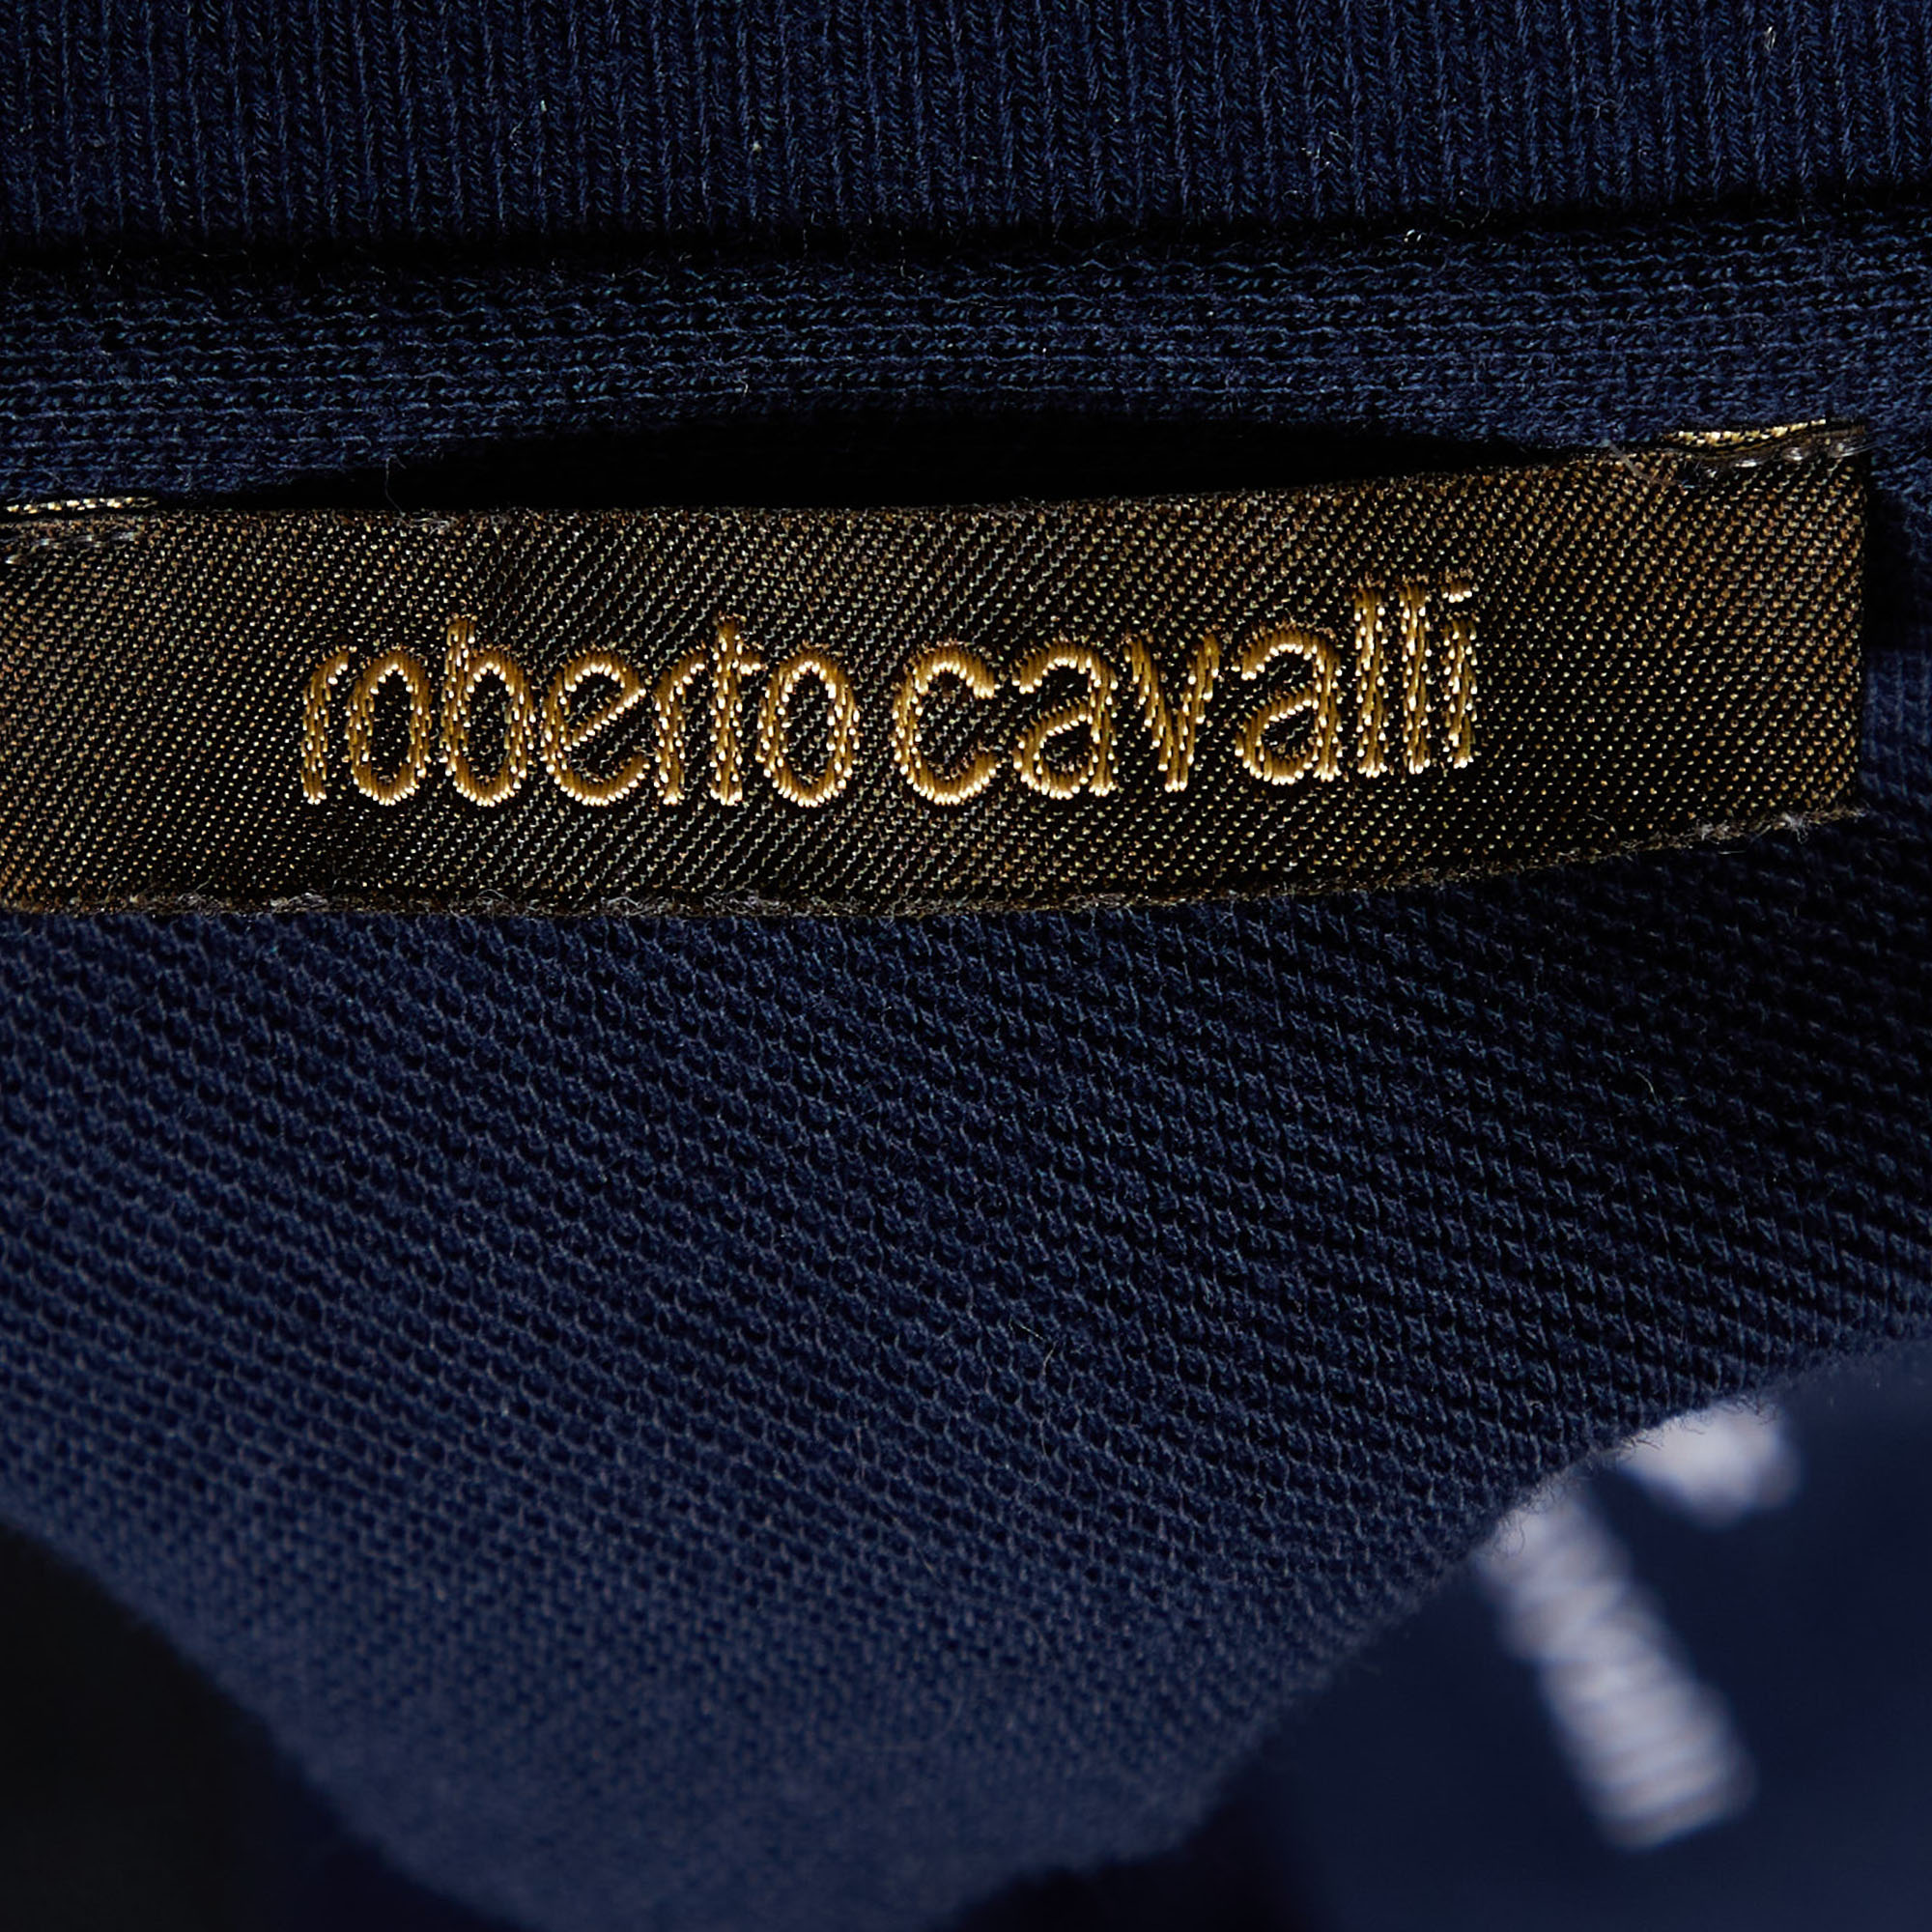 Roberto Cavalli Navy Blue Logo Embroidered Cotton Polo T-Shirt L